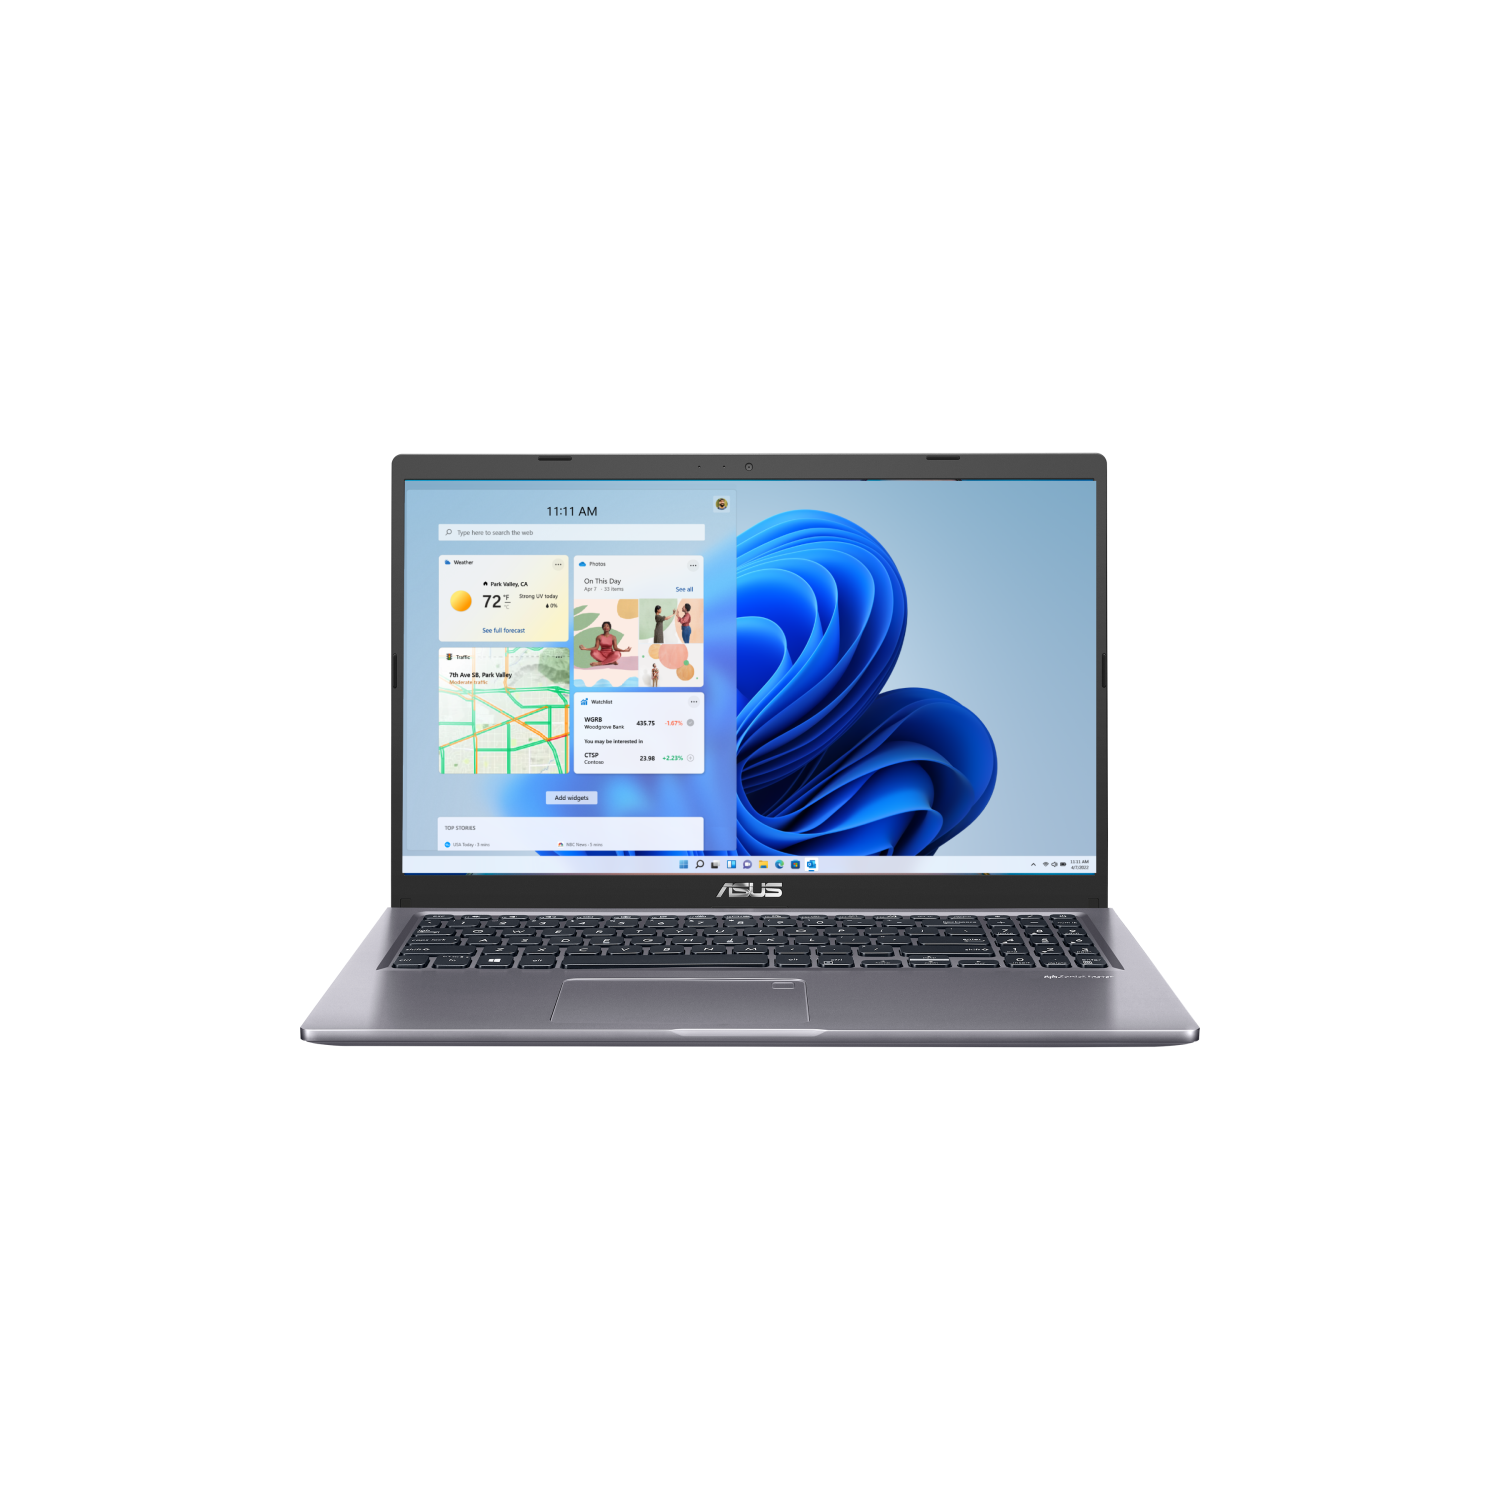 ASUS VivoBook 15 X515 Thin and Light Laptop, 15.6” IPS FHD Display, Intel Core i5-1135G7 Processor, Intel UHD graphics, 8GB DDR4 RAM, 256GB SSD, Fingerprint Reader, X515EA-DS59-CA